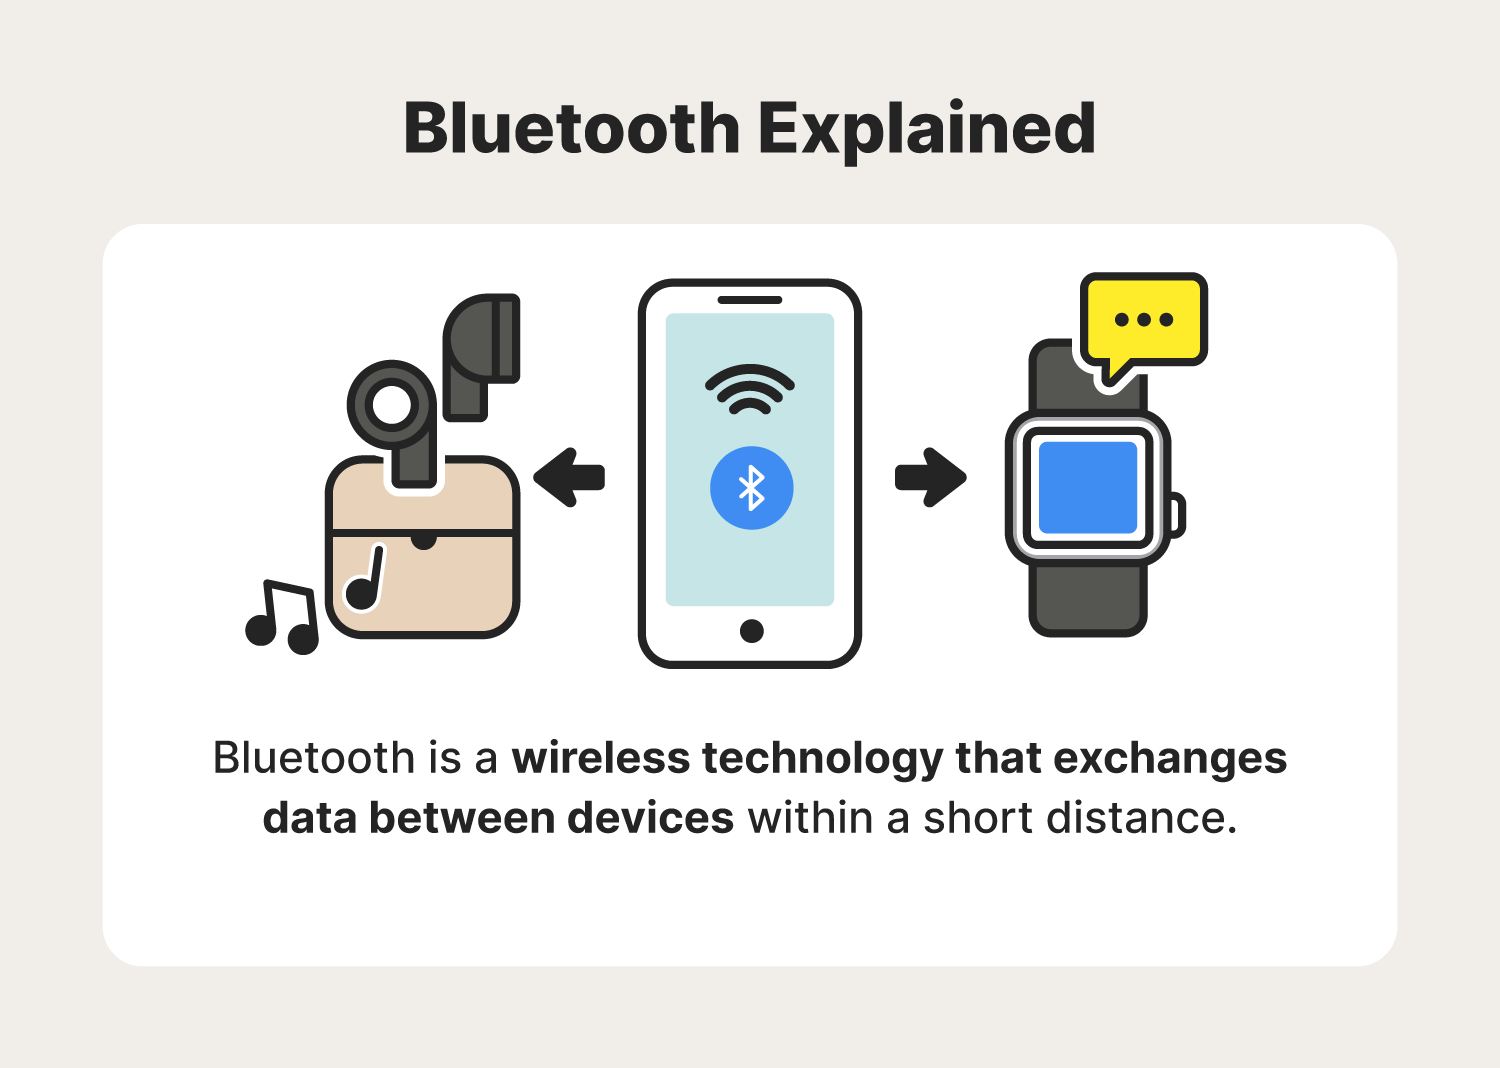 Bluetooth explained